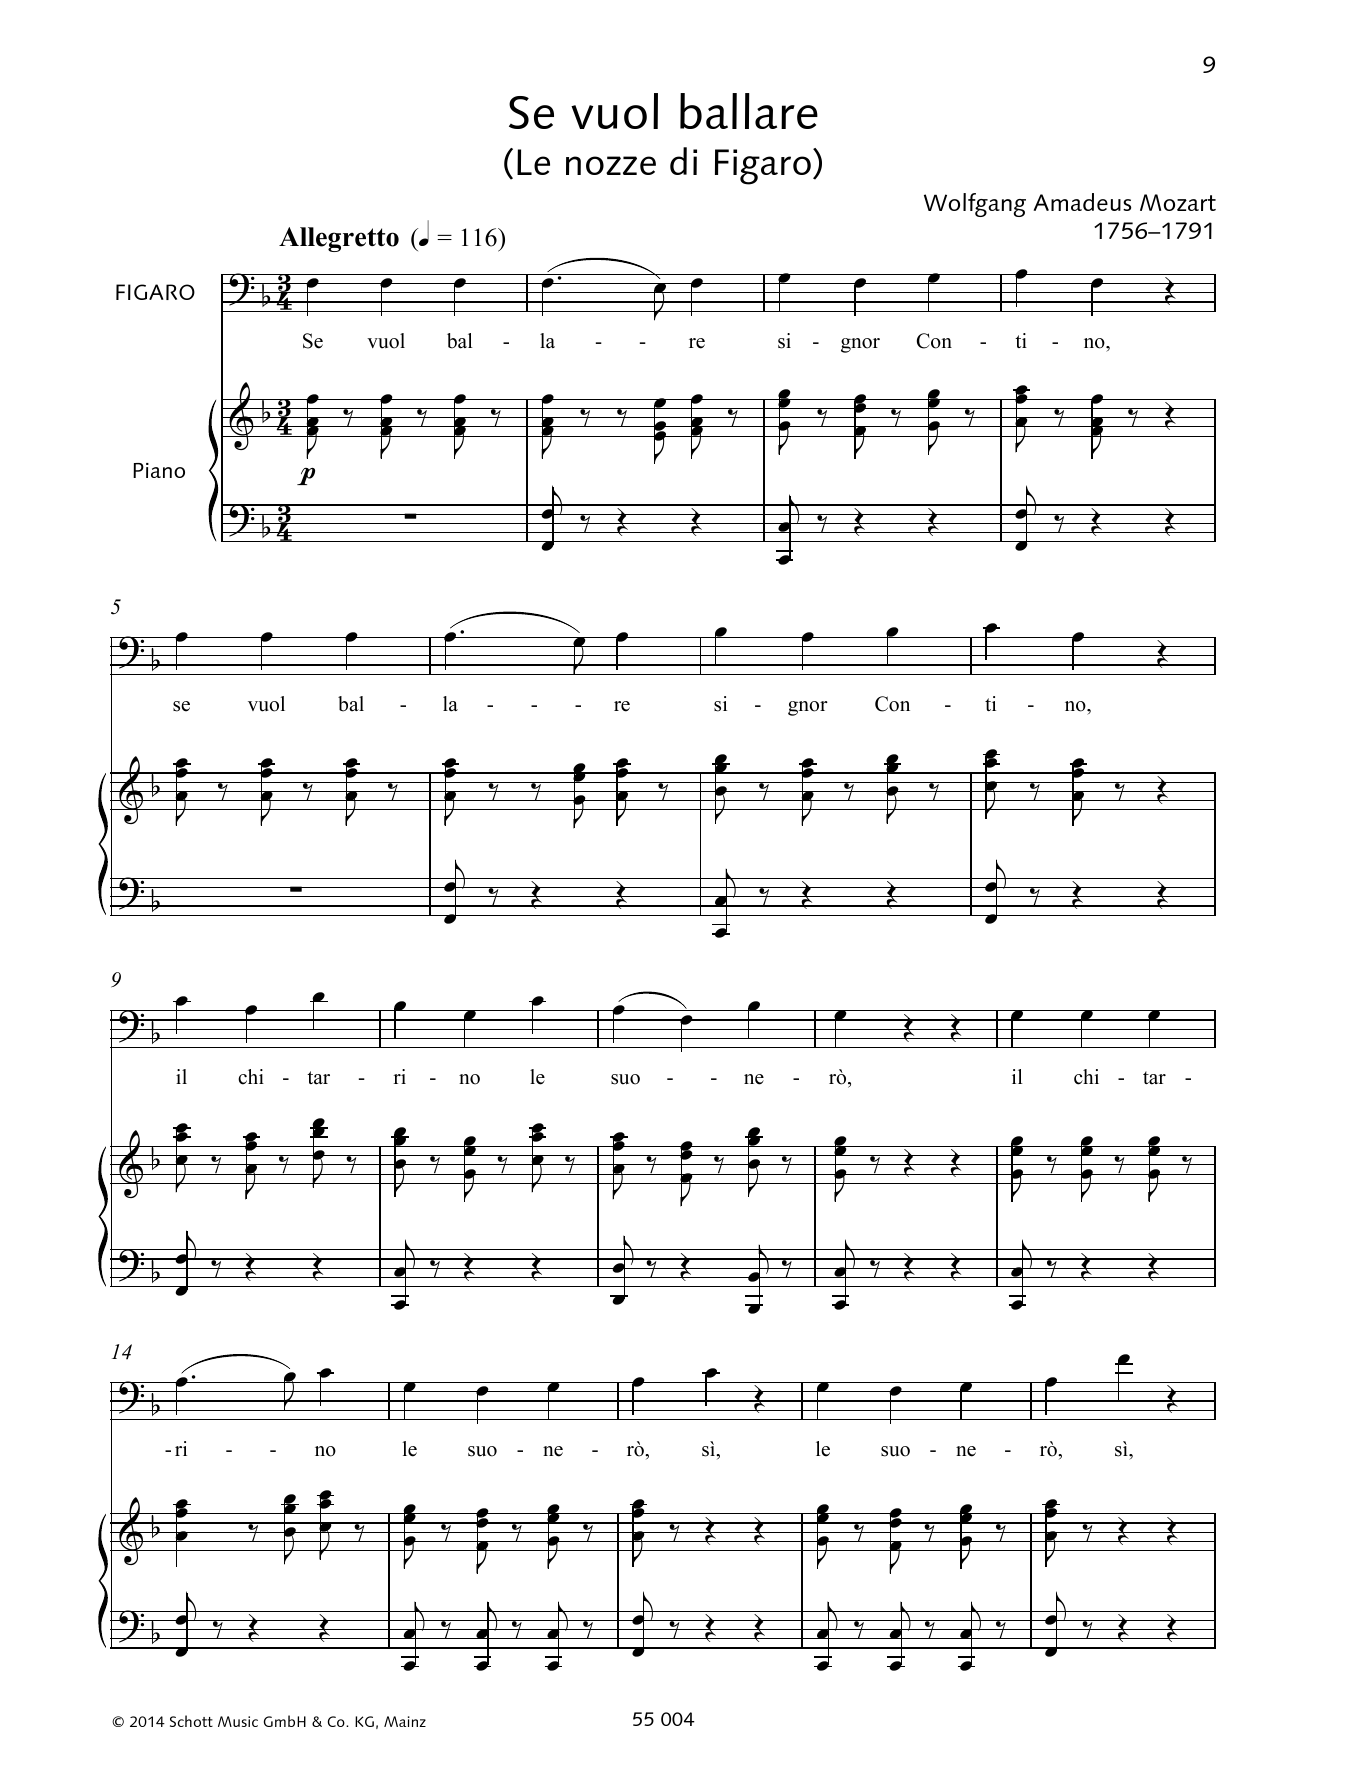 Wolfgang Amadeus Mozart Se vuol ballare Sheet Music Notes & Chords for Piano & Vocal - Download or Print PDF